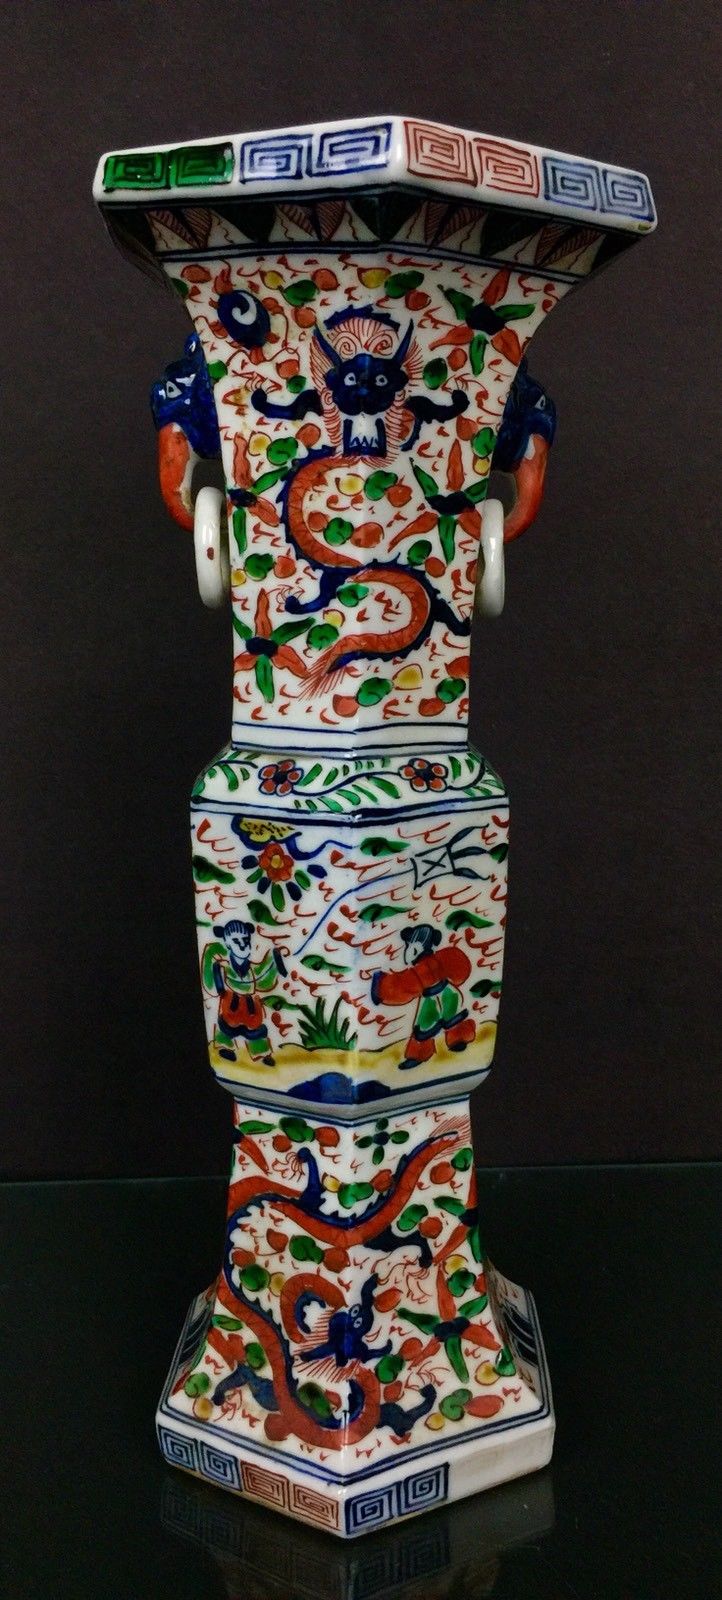 Wonderful Antique Chinese Qing Dynasty Porcelain Vase With Amazing Details